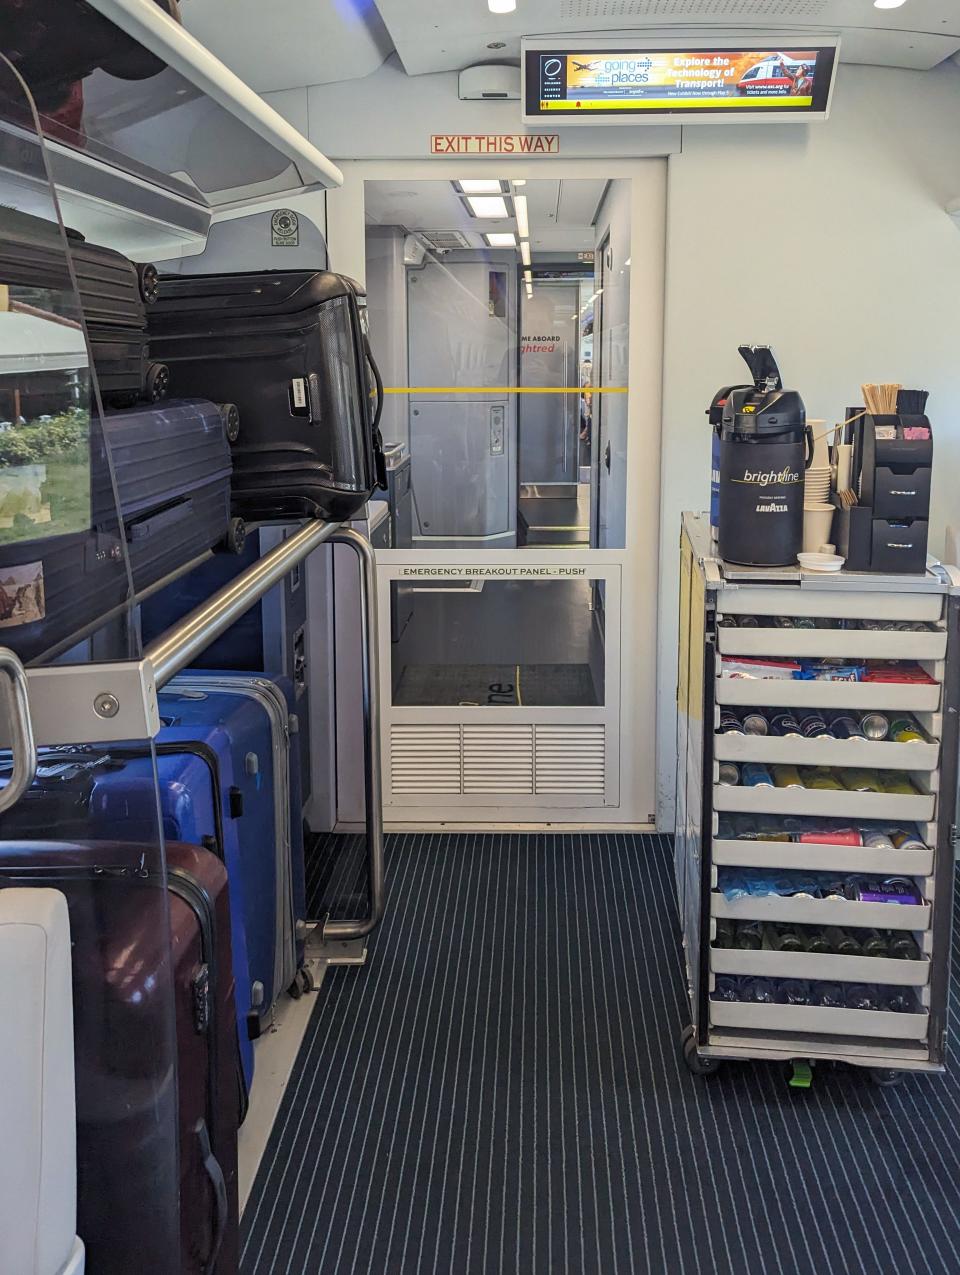 Luggage storage is shown on a Brightline train.